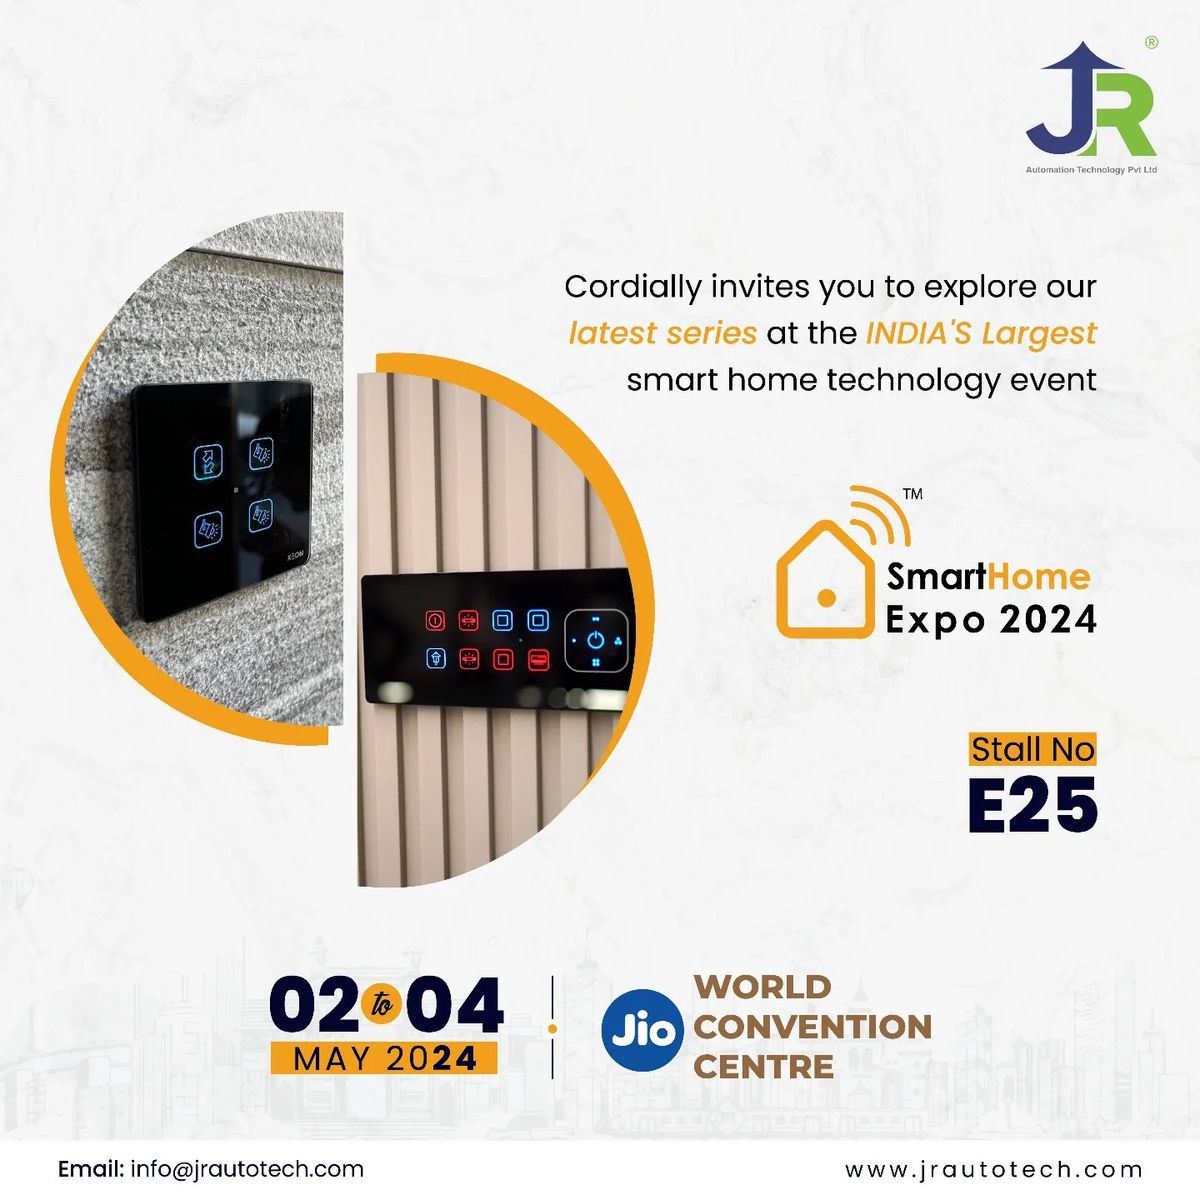 JR Automation Technology Pvt Ltd - Smart Home Expo 2024